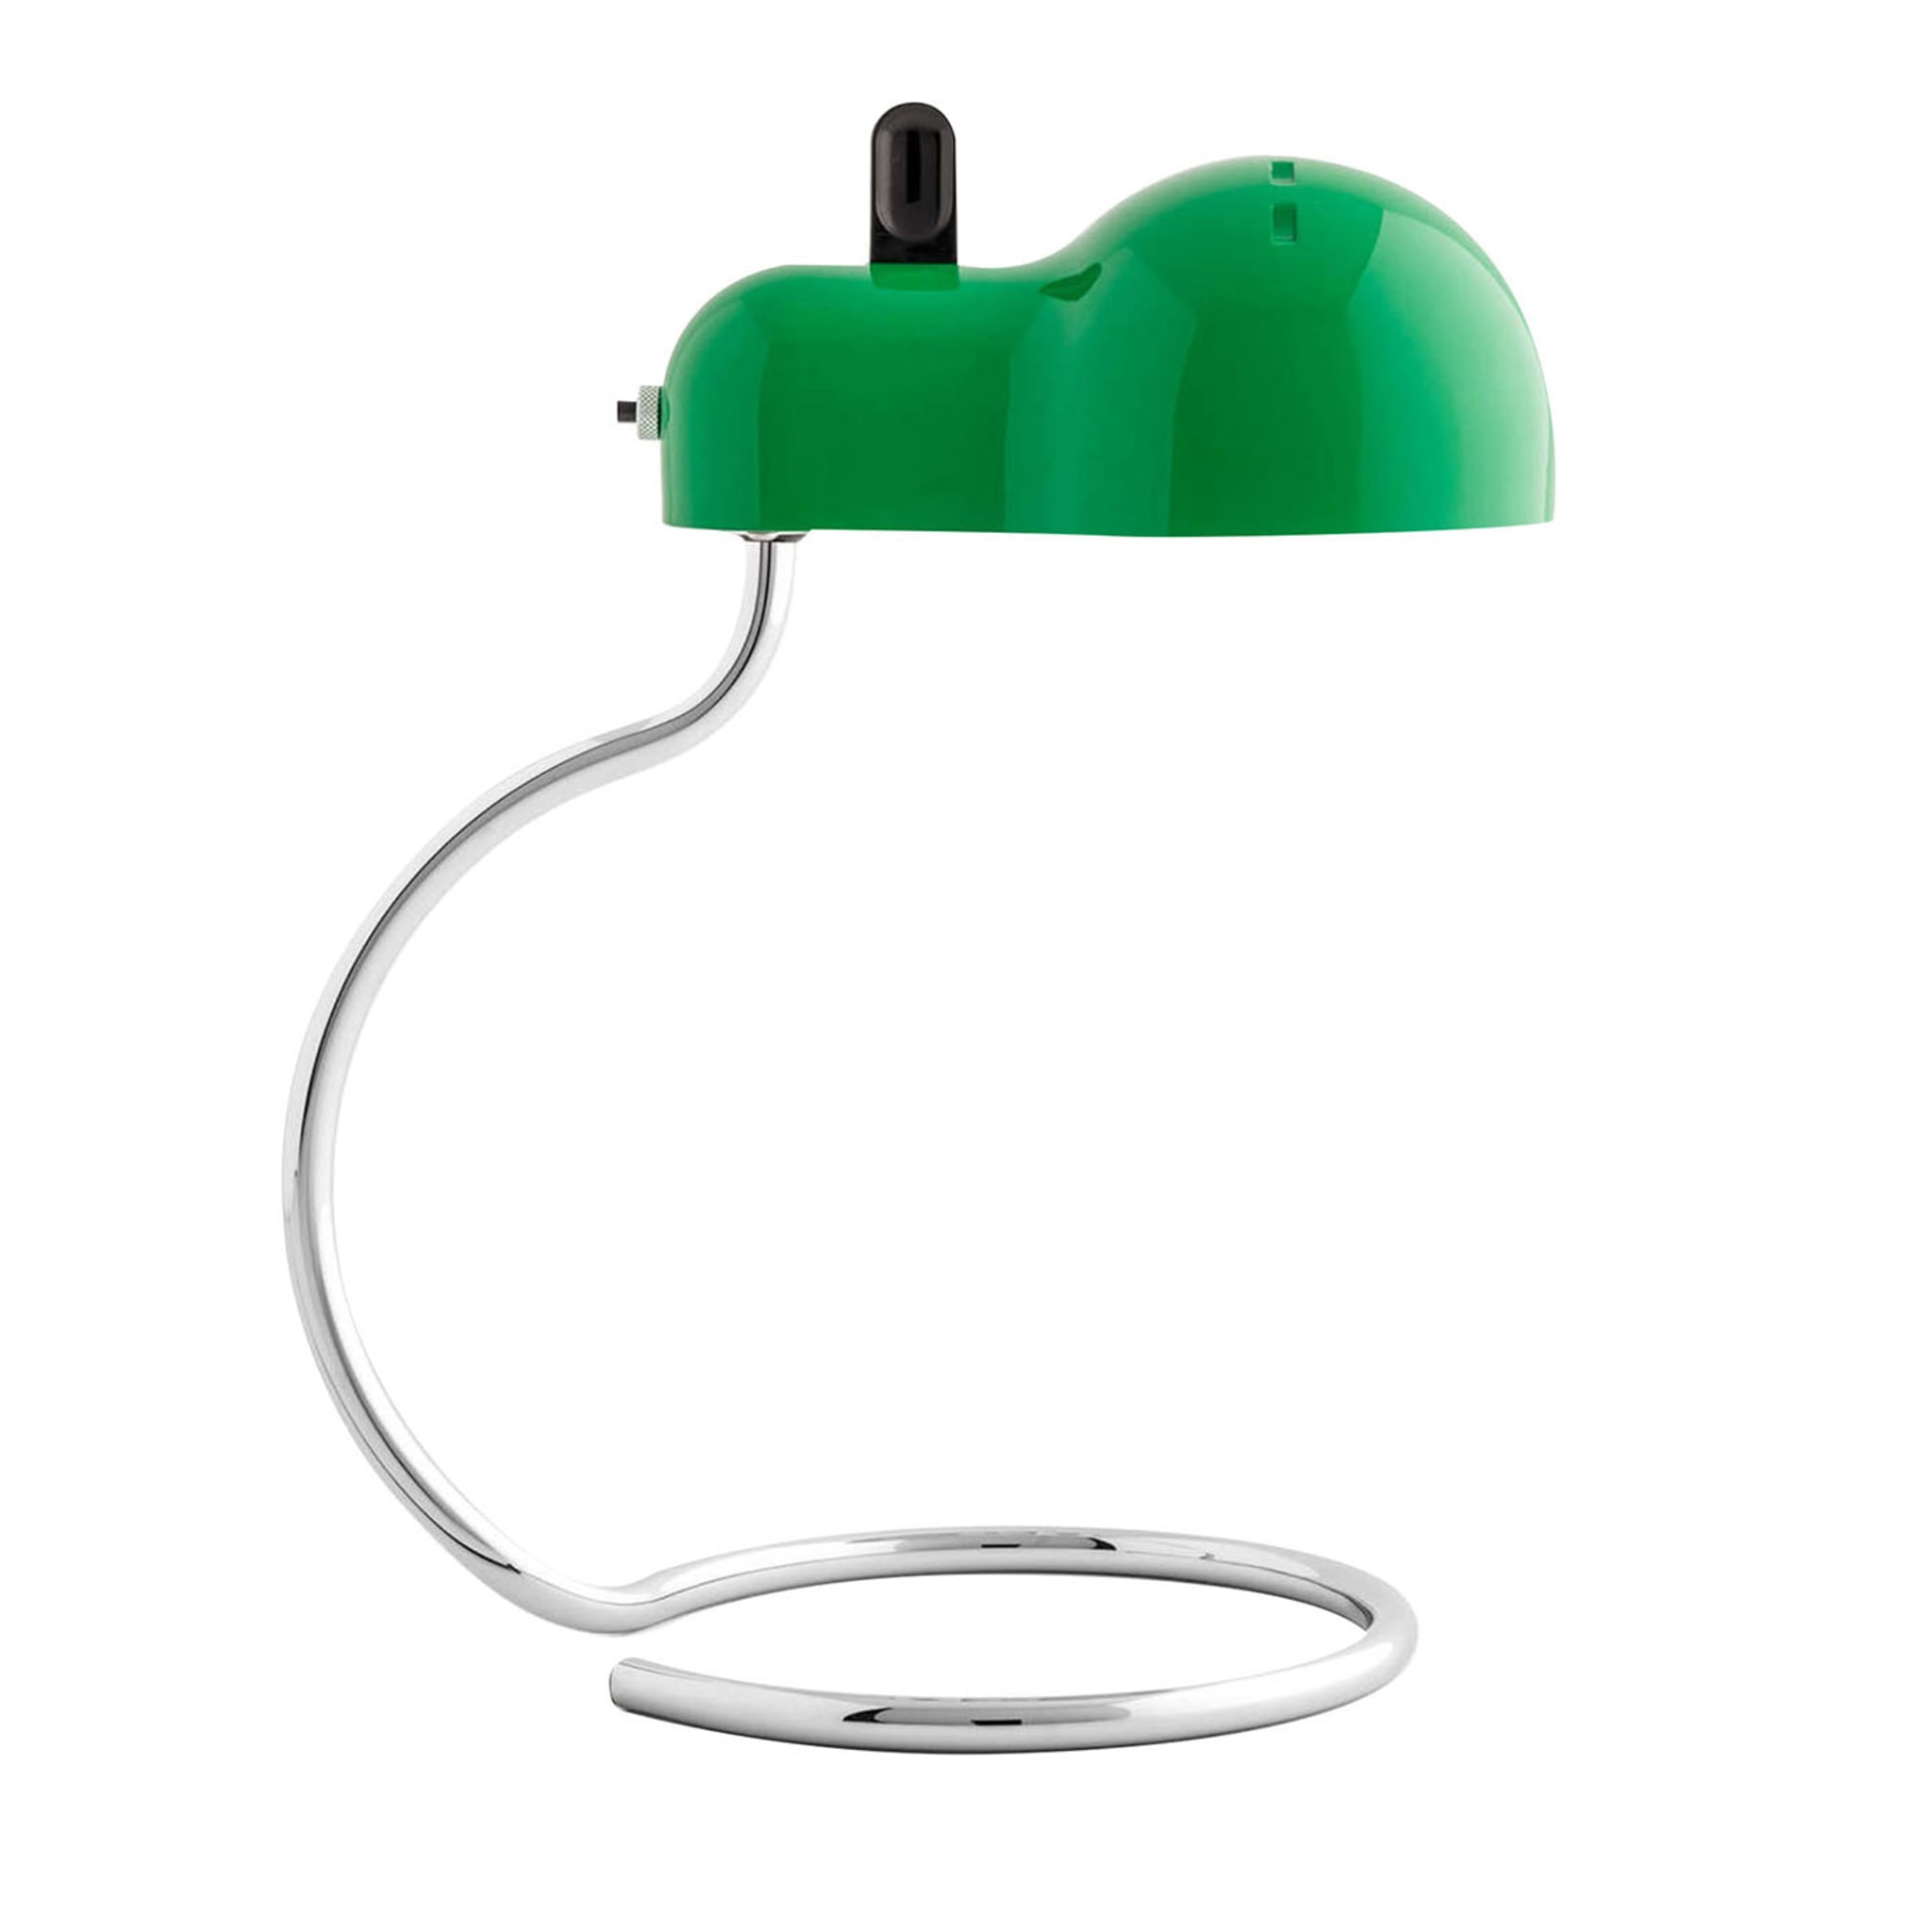 MiniTopo Green Table Lamp designed by Joe Colombo - Main view